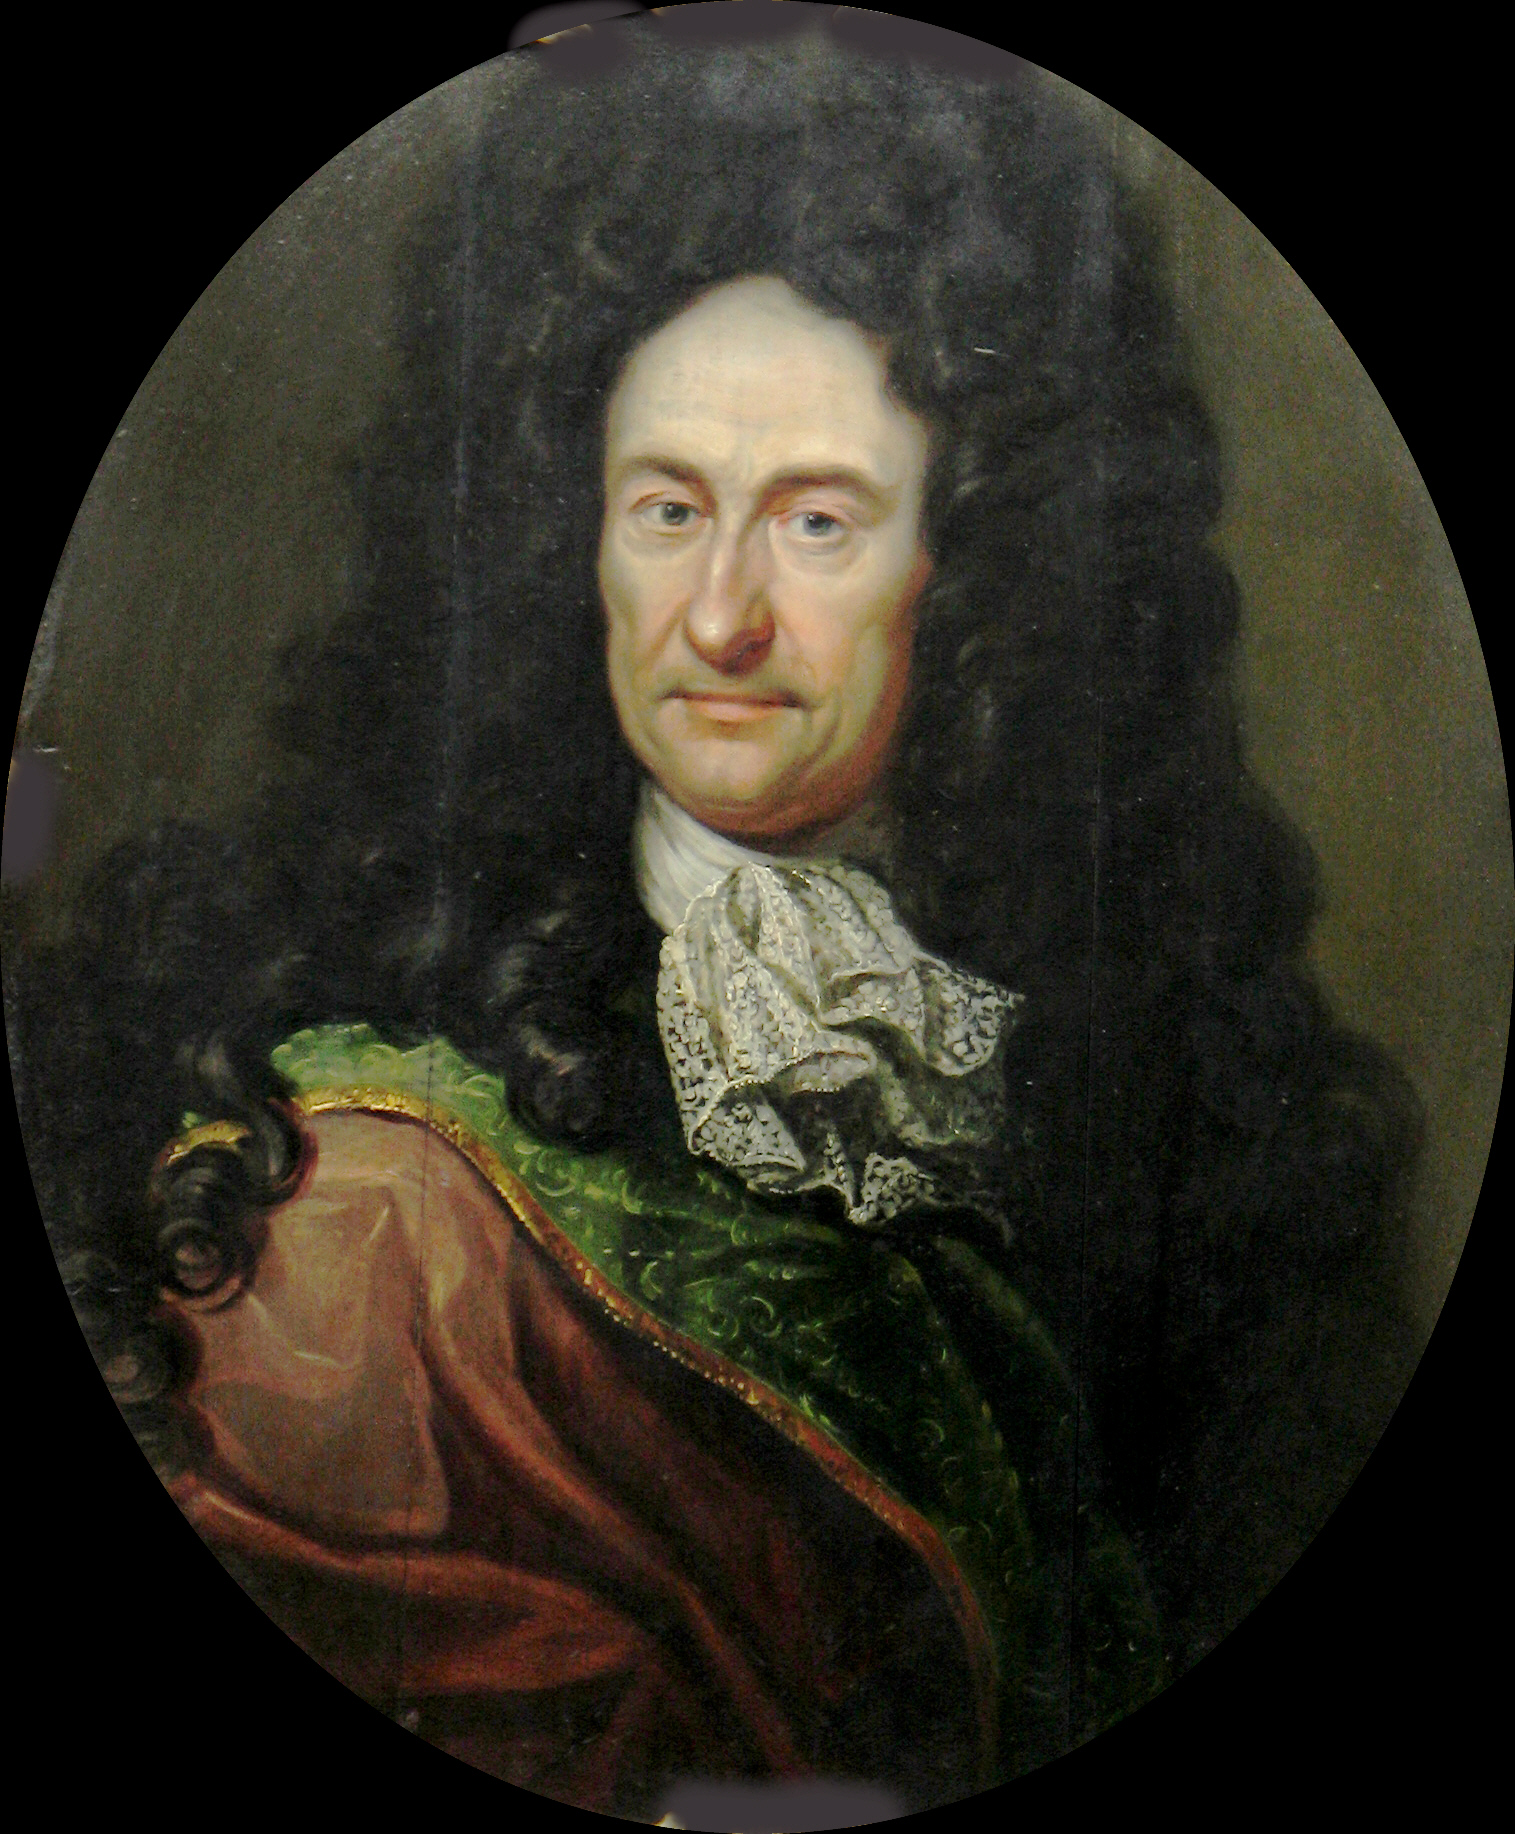 Gottfried_Wilhelm_Leibniz_c1700